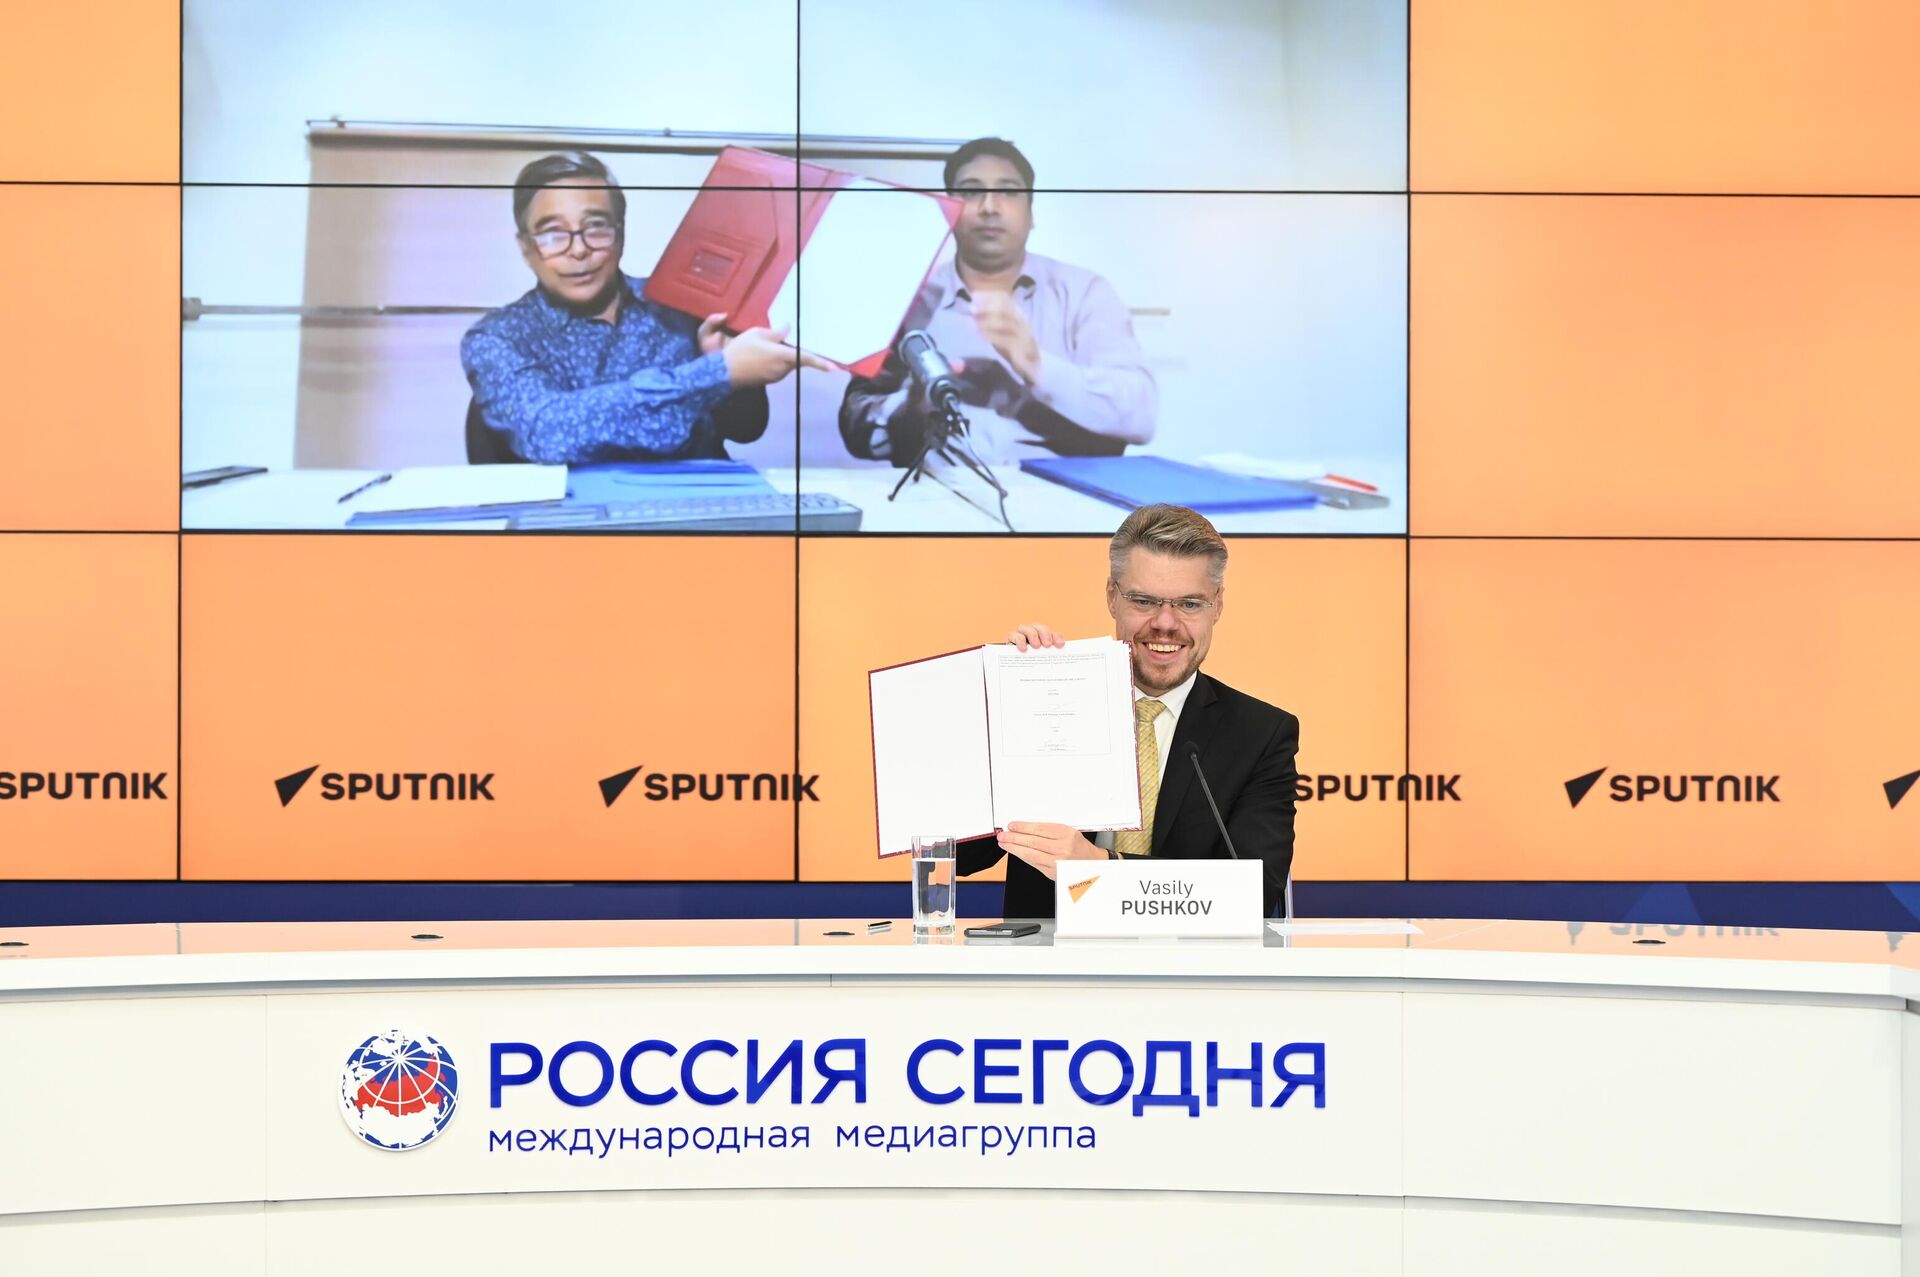 Sputnik Director for International Cooperation Vasily Pushkov and UNB Editor Farid Hossain signing  the agreement on cooperation. November 7, 2022. - Sputnik International, 1920, 07.11.2022